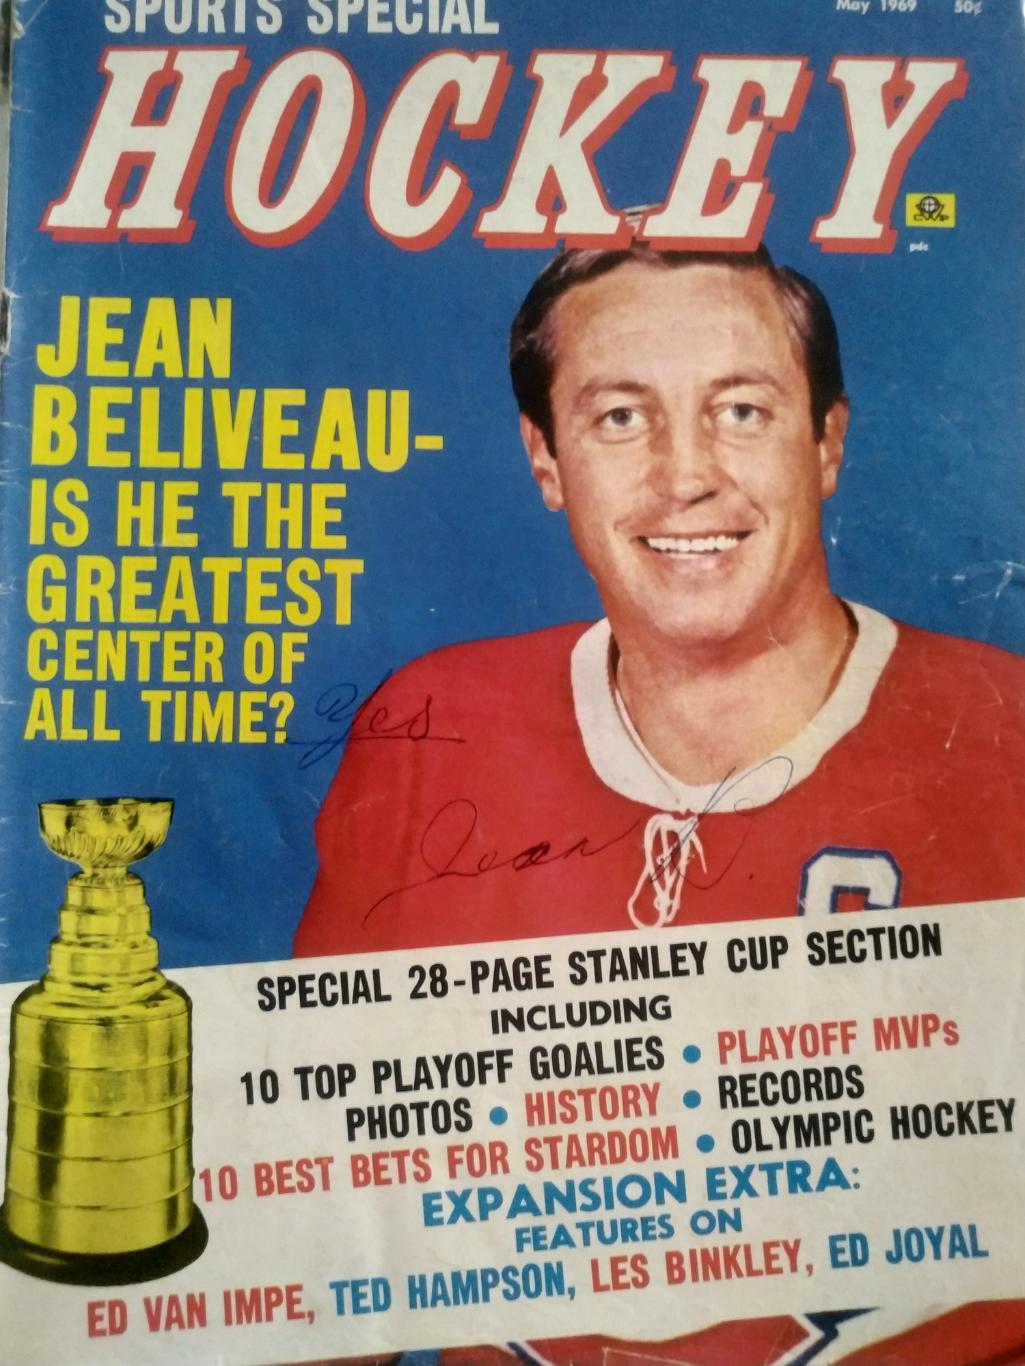 ЖУРНАЛ НХЛ СПОРТ СПЕШИАЛ ХОККЕЙ MAY 1969 NHL SPORTS SPECIAL HOCKEY